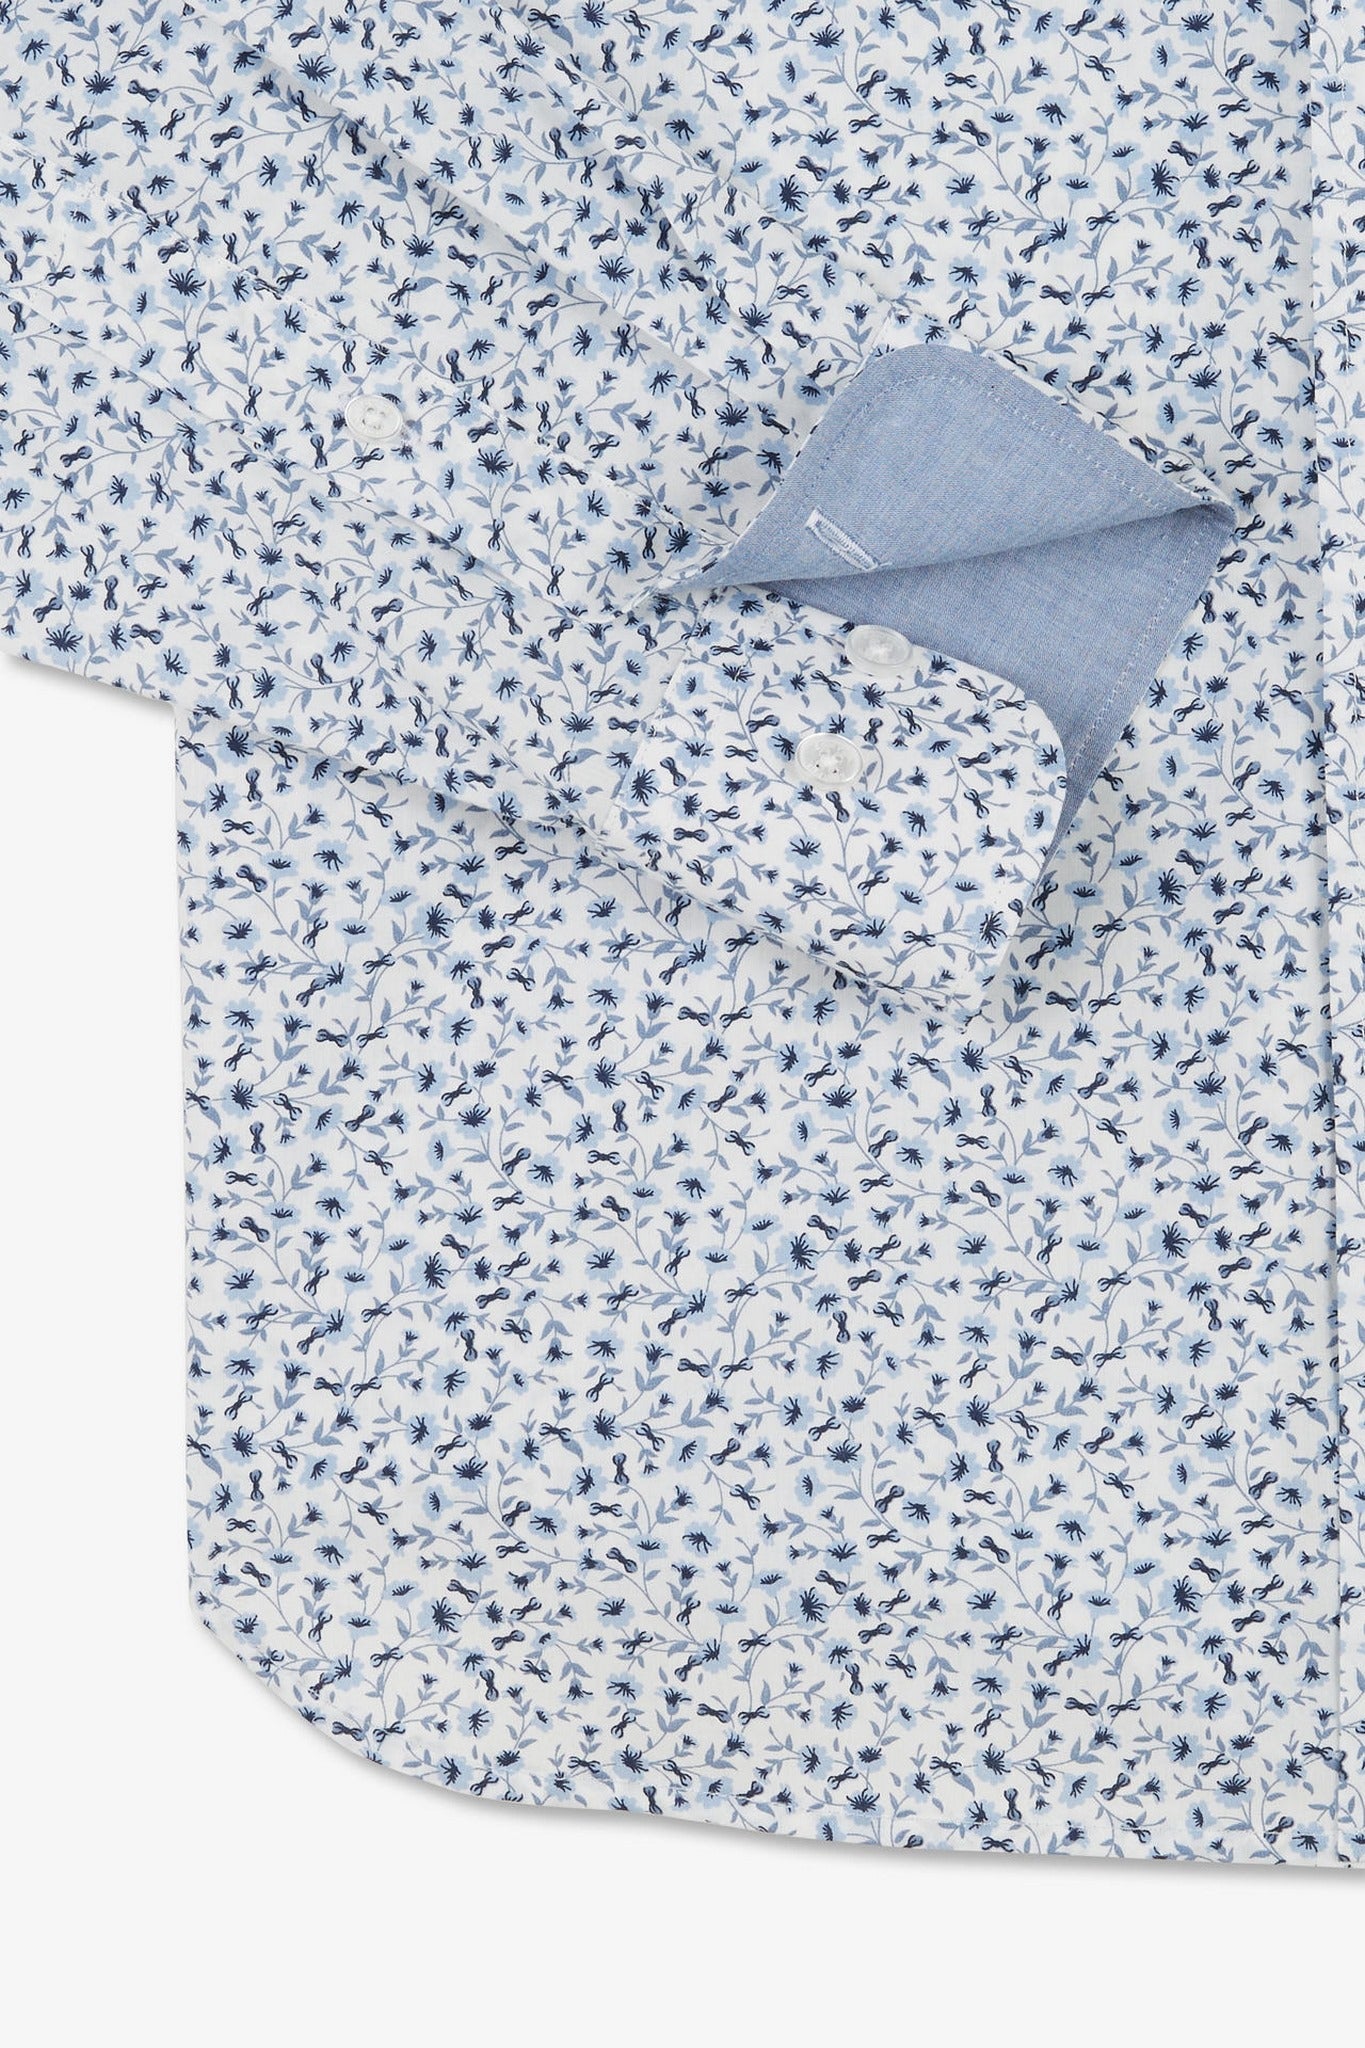 Chemise bleu clair à micro motif fleuri - Image 9